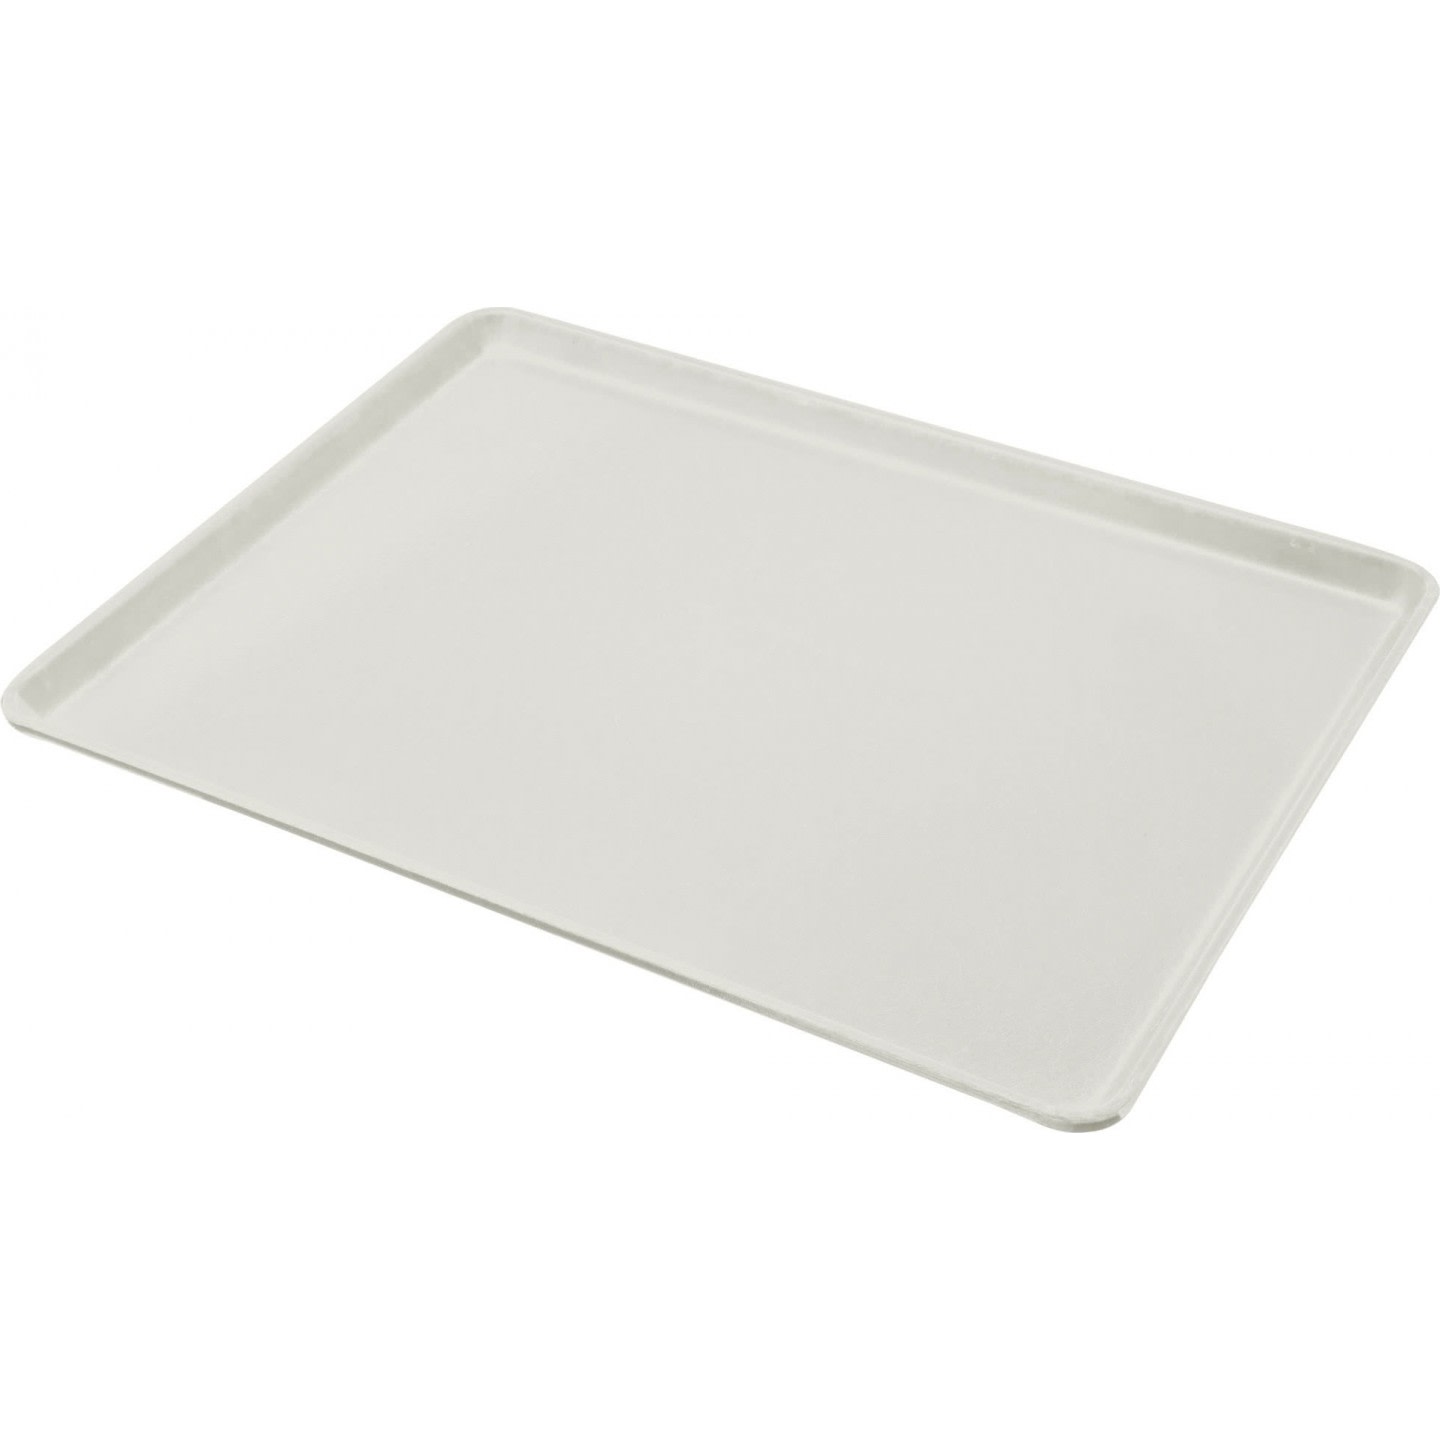 Omcan Plastic Tray White 18" x 26" - 14244